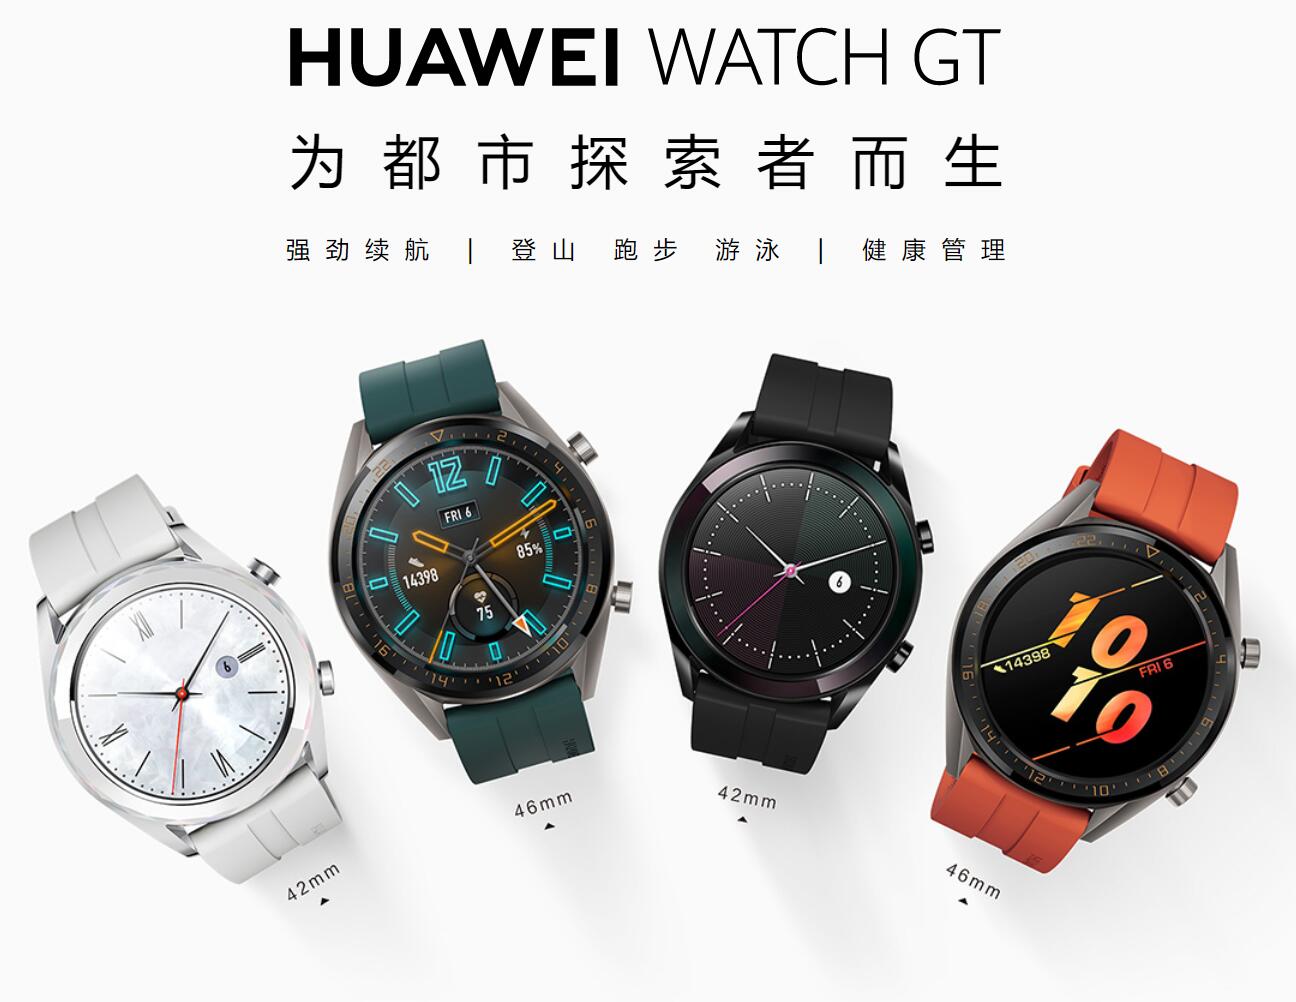 Huawei Watch GT gets firmware update 